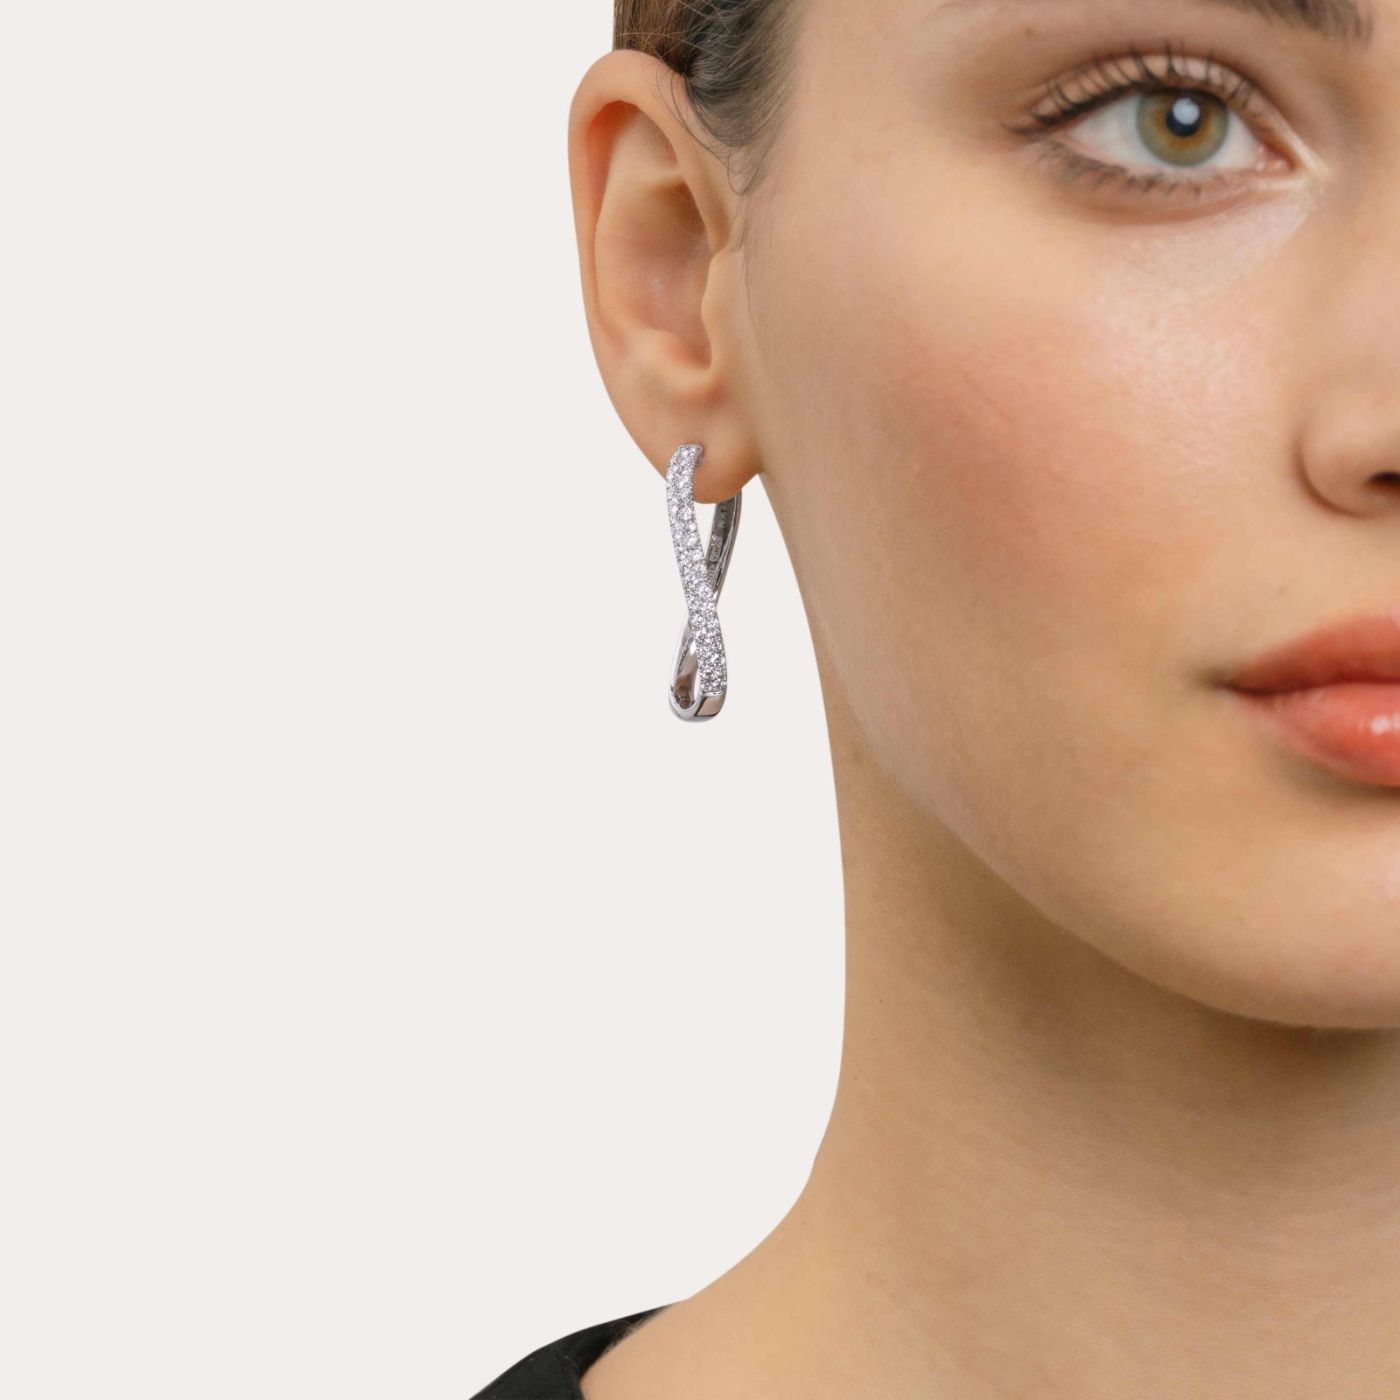 White gold hoop earrings with diamonds